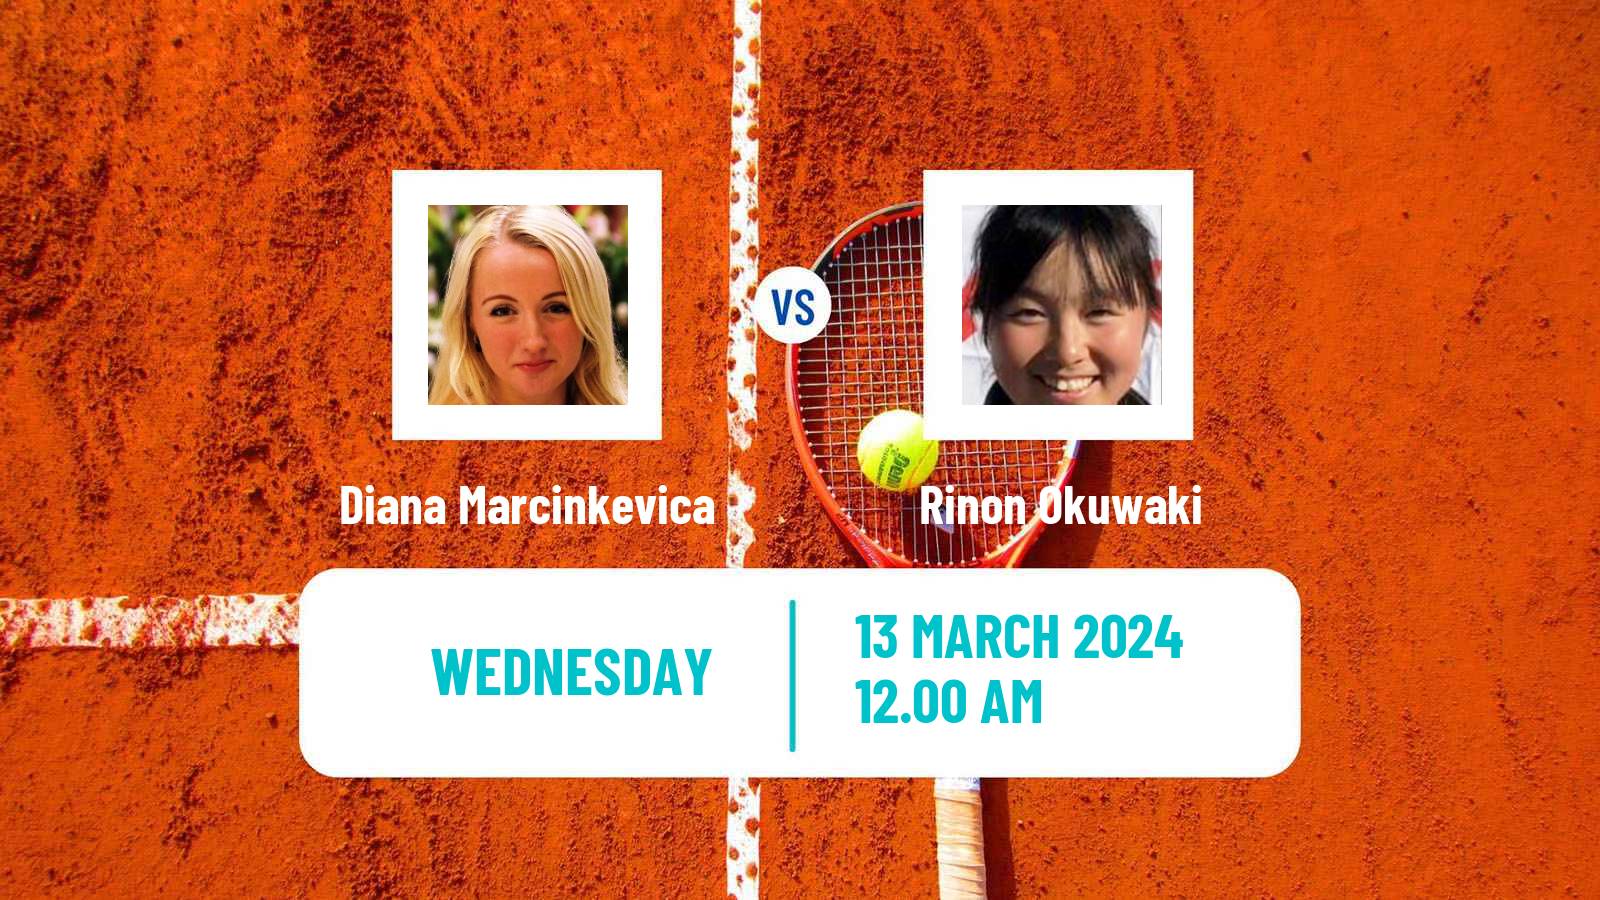 Tennis ITF W35 Indore Women Diana Marcinkevica - Rinon Okuwaki